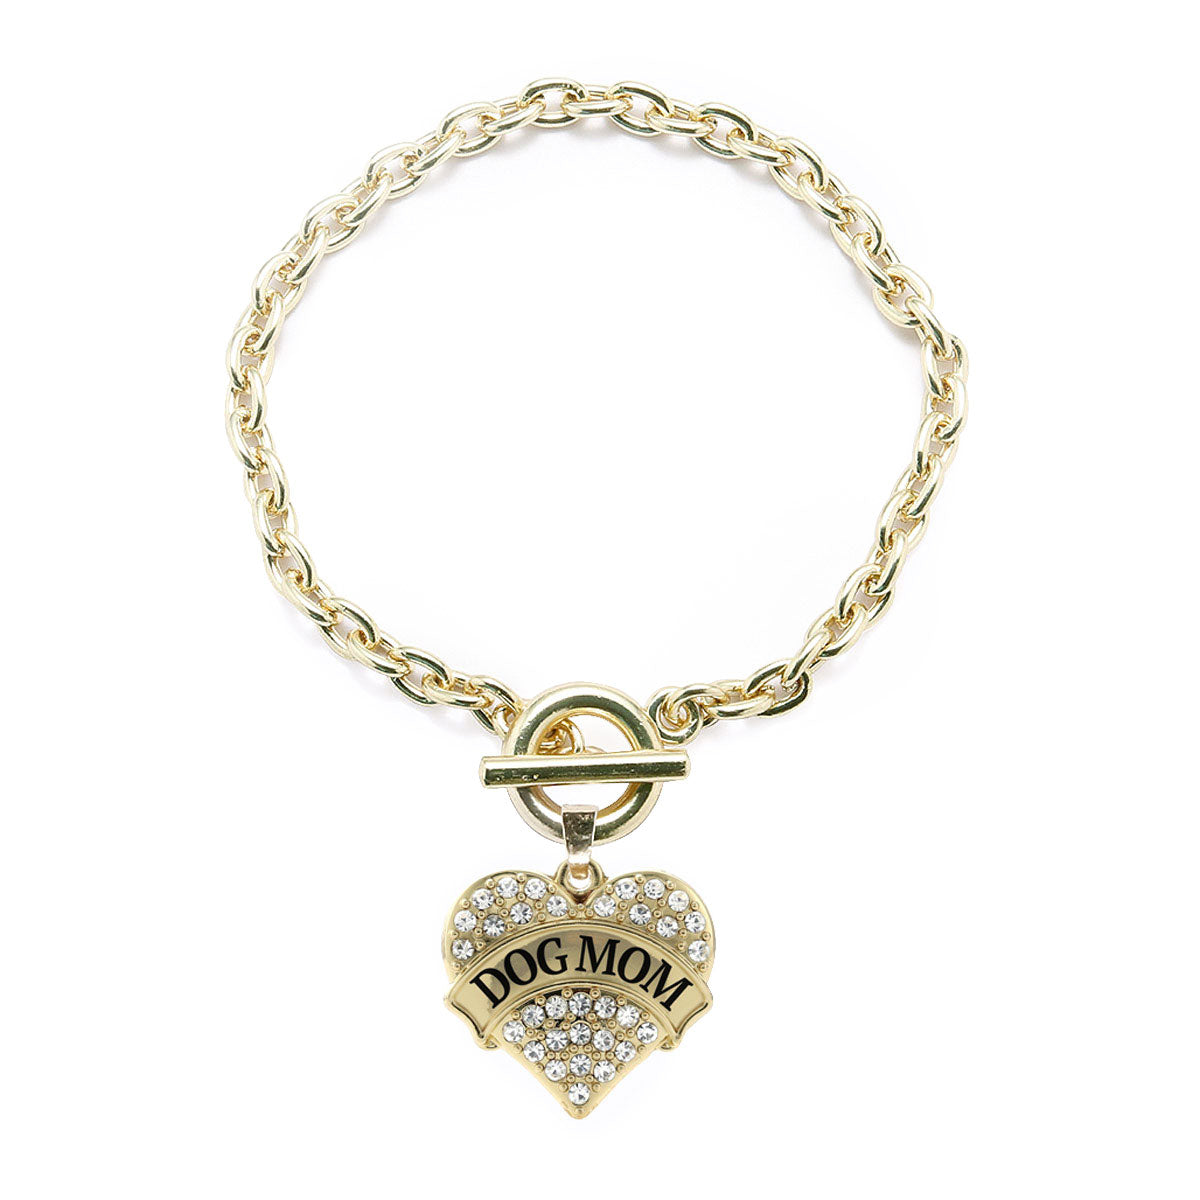 Gold Dog Mom Pave Heart Charm Toggle Bracelet